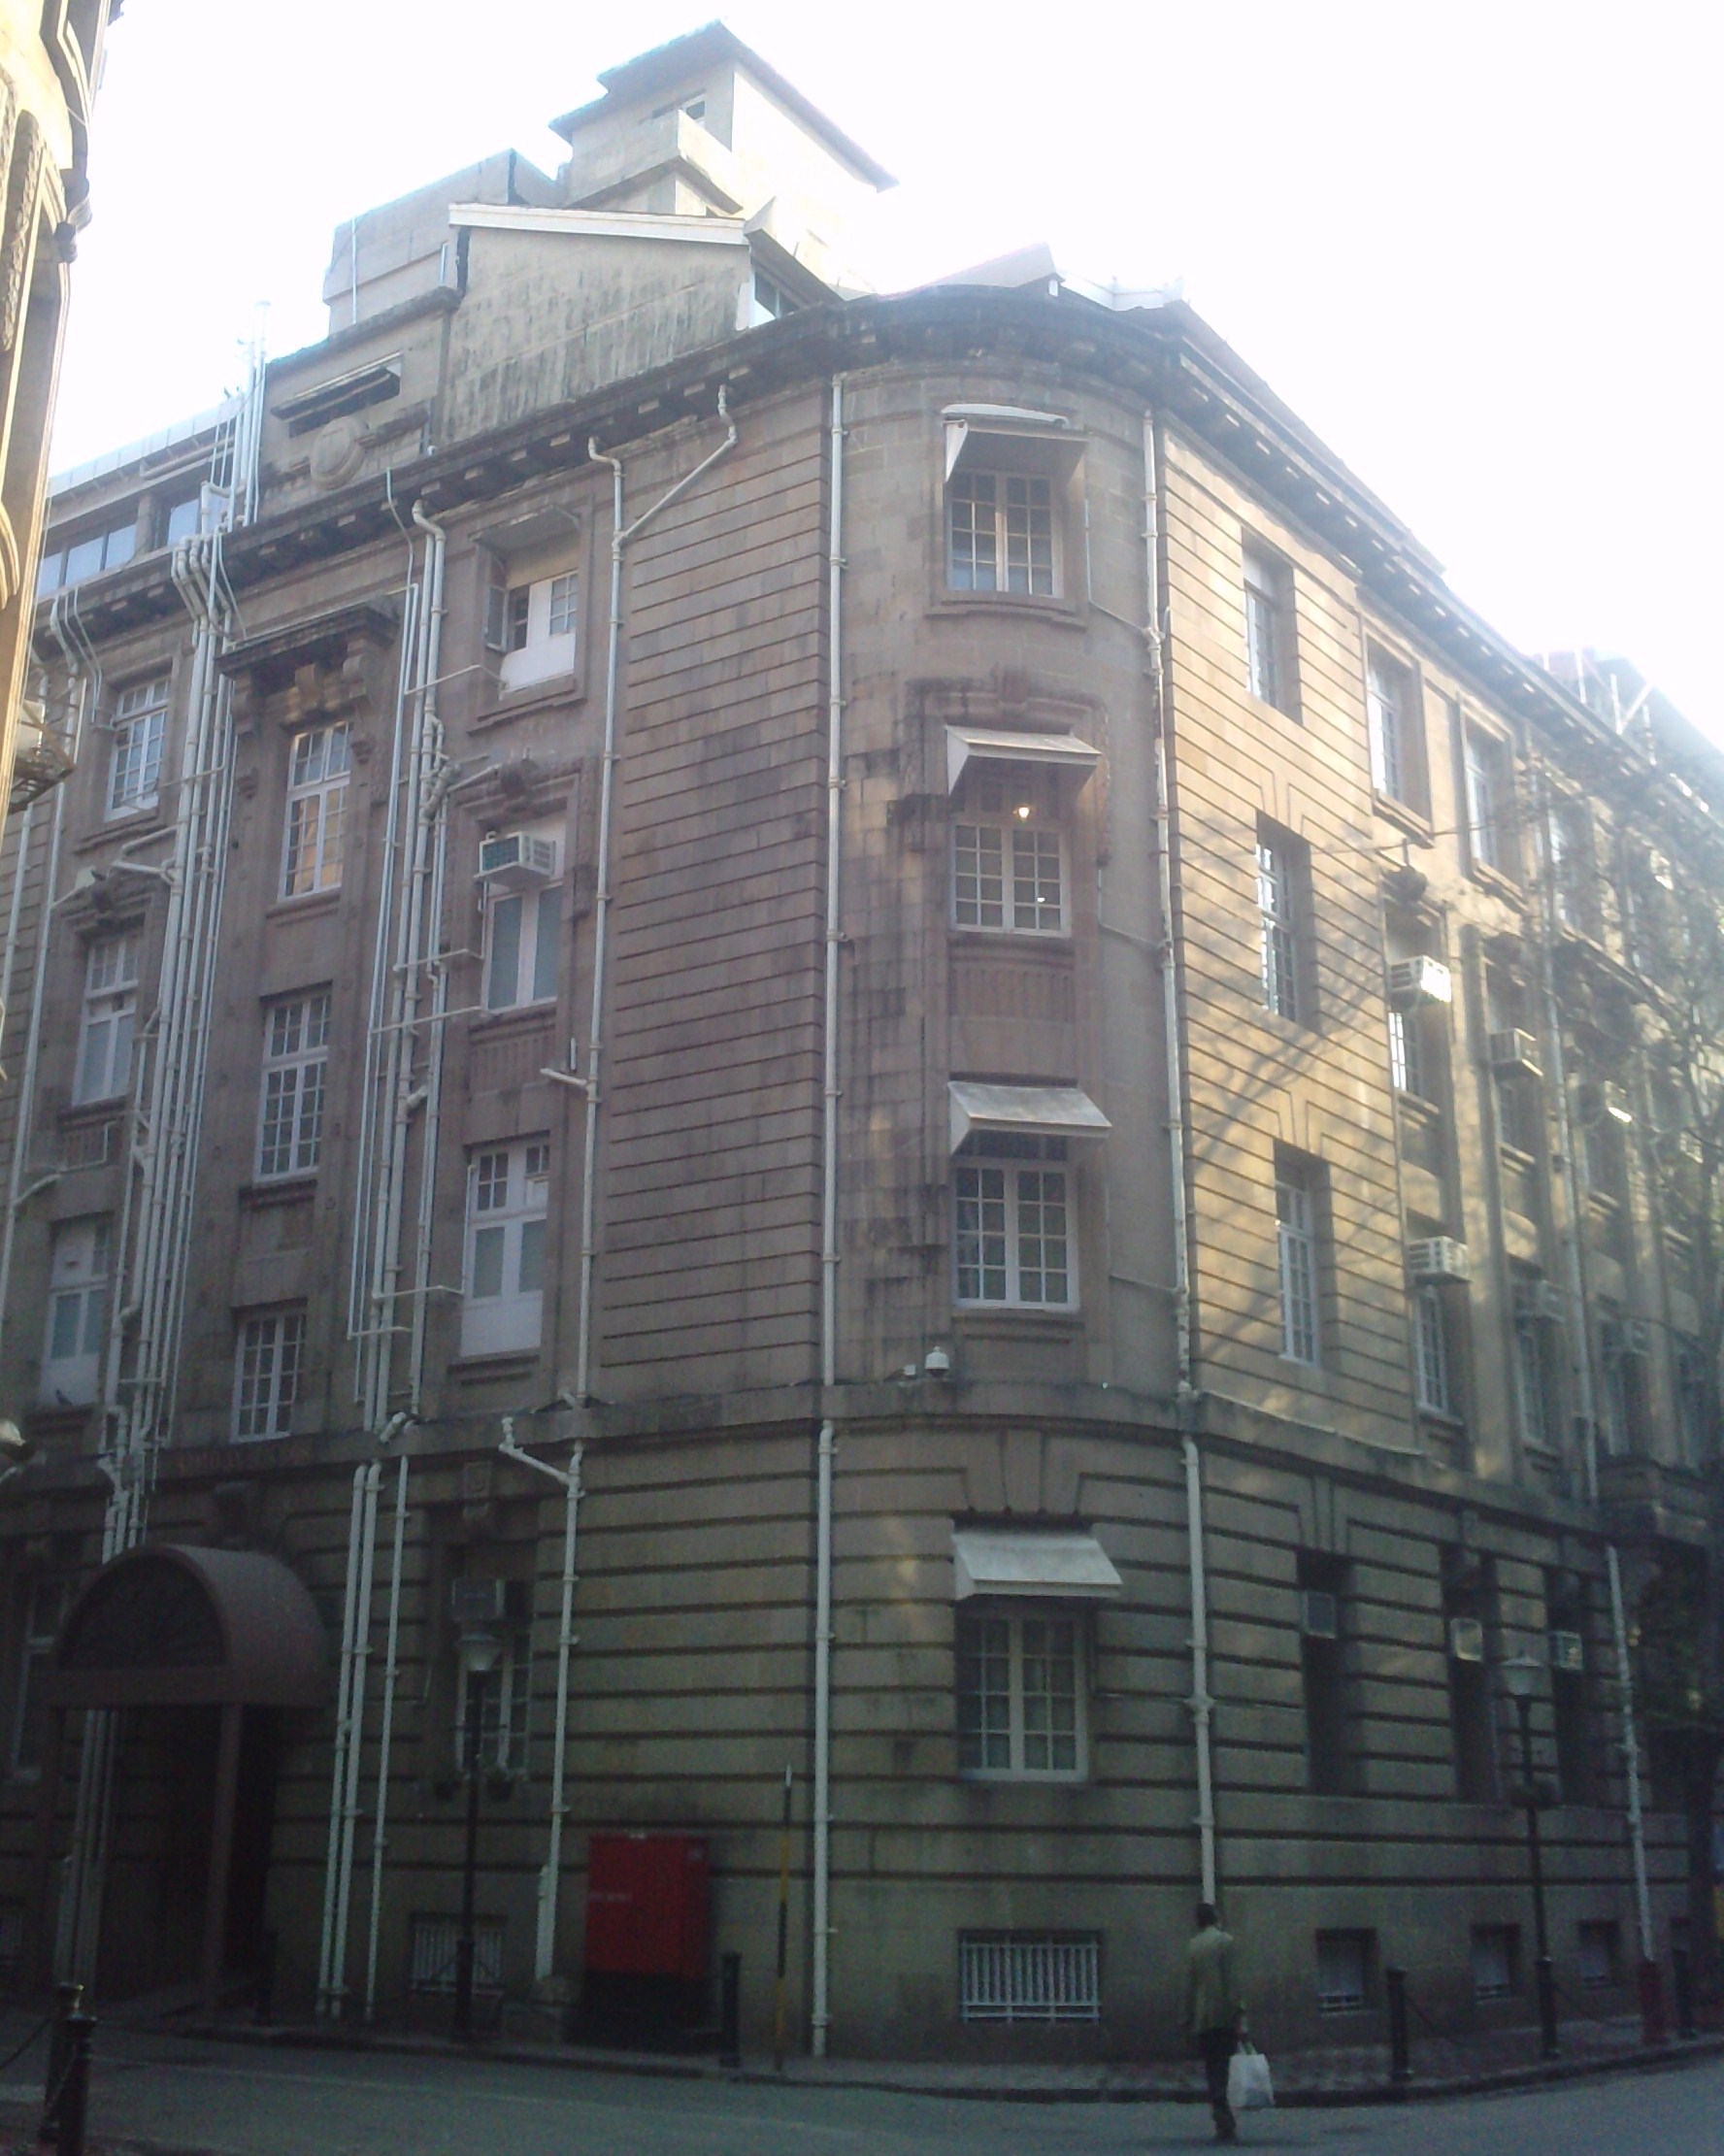 Tata House